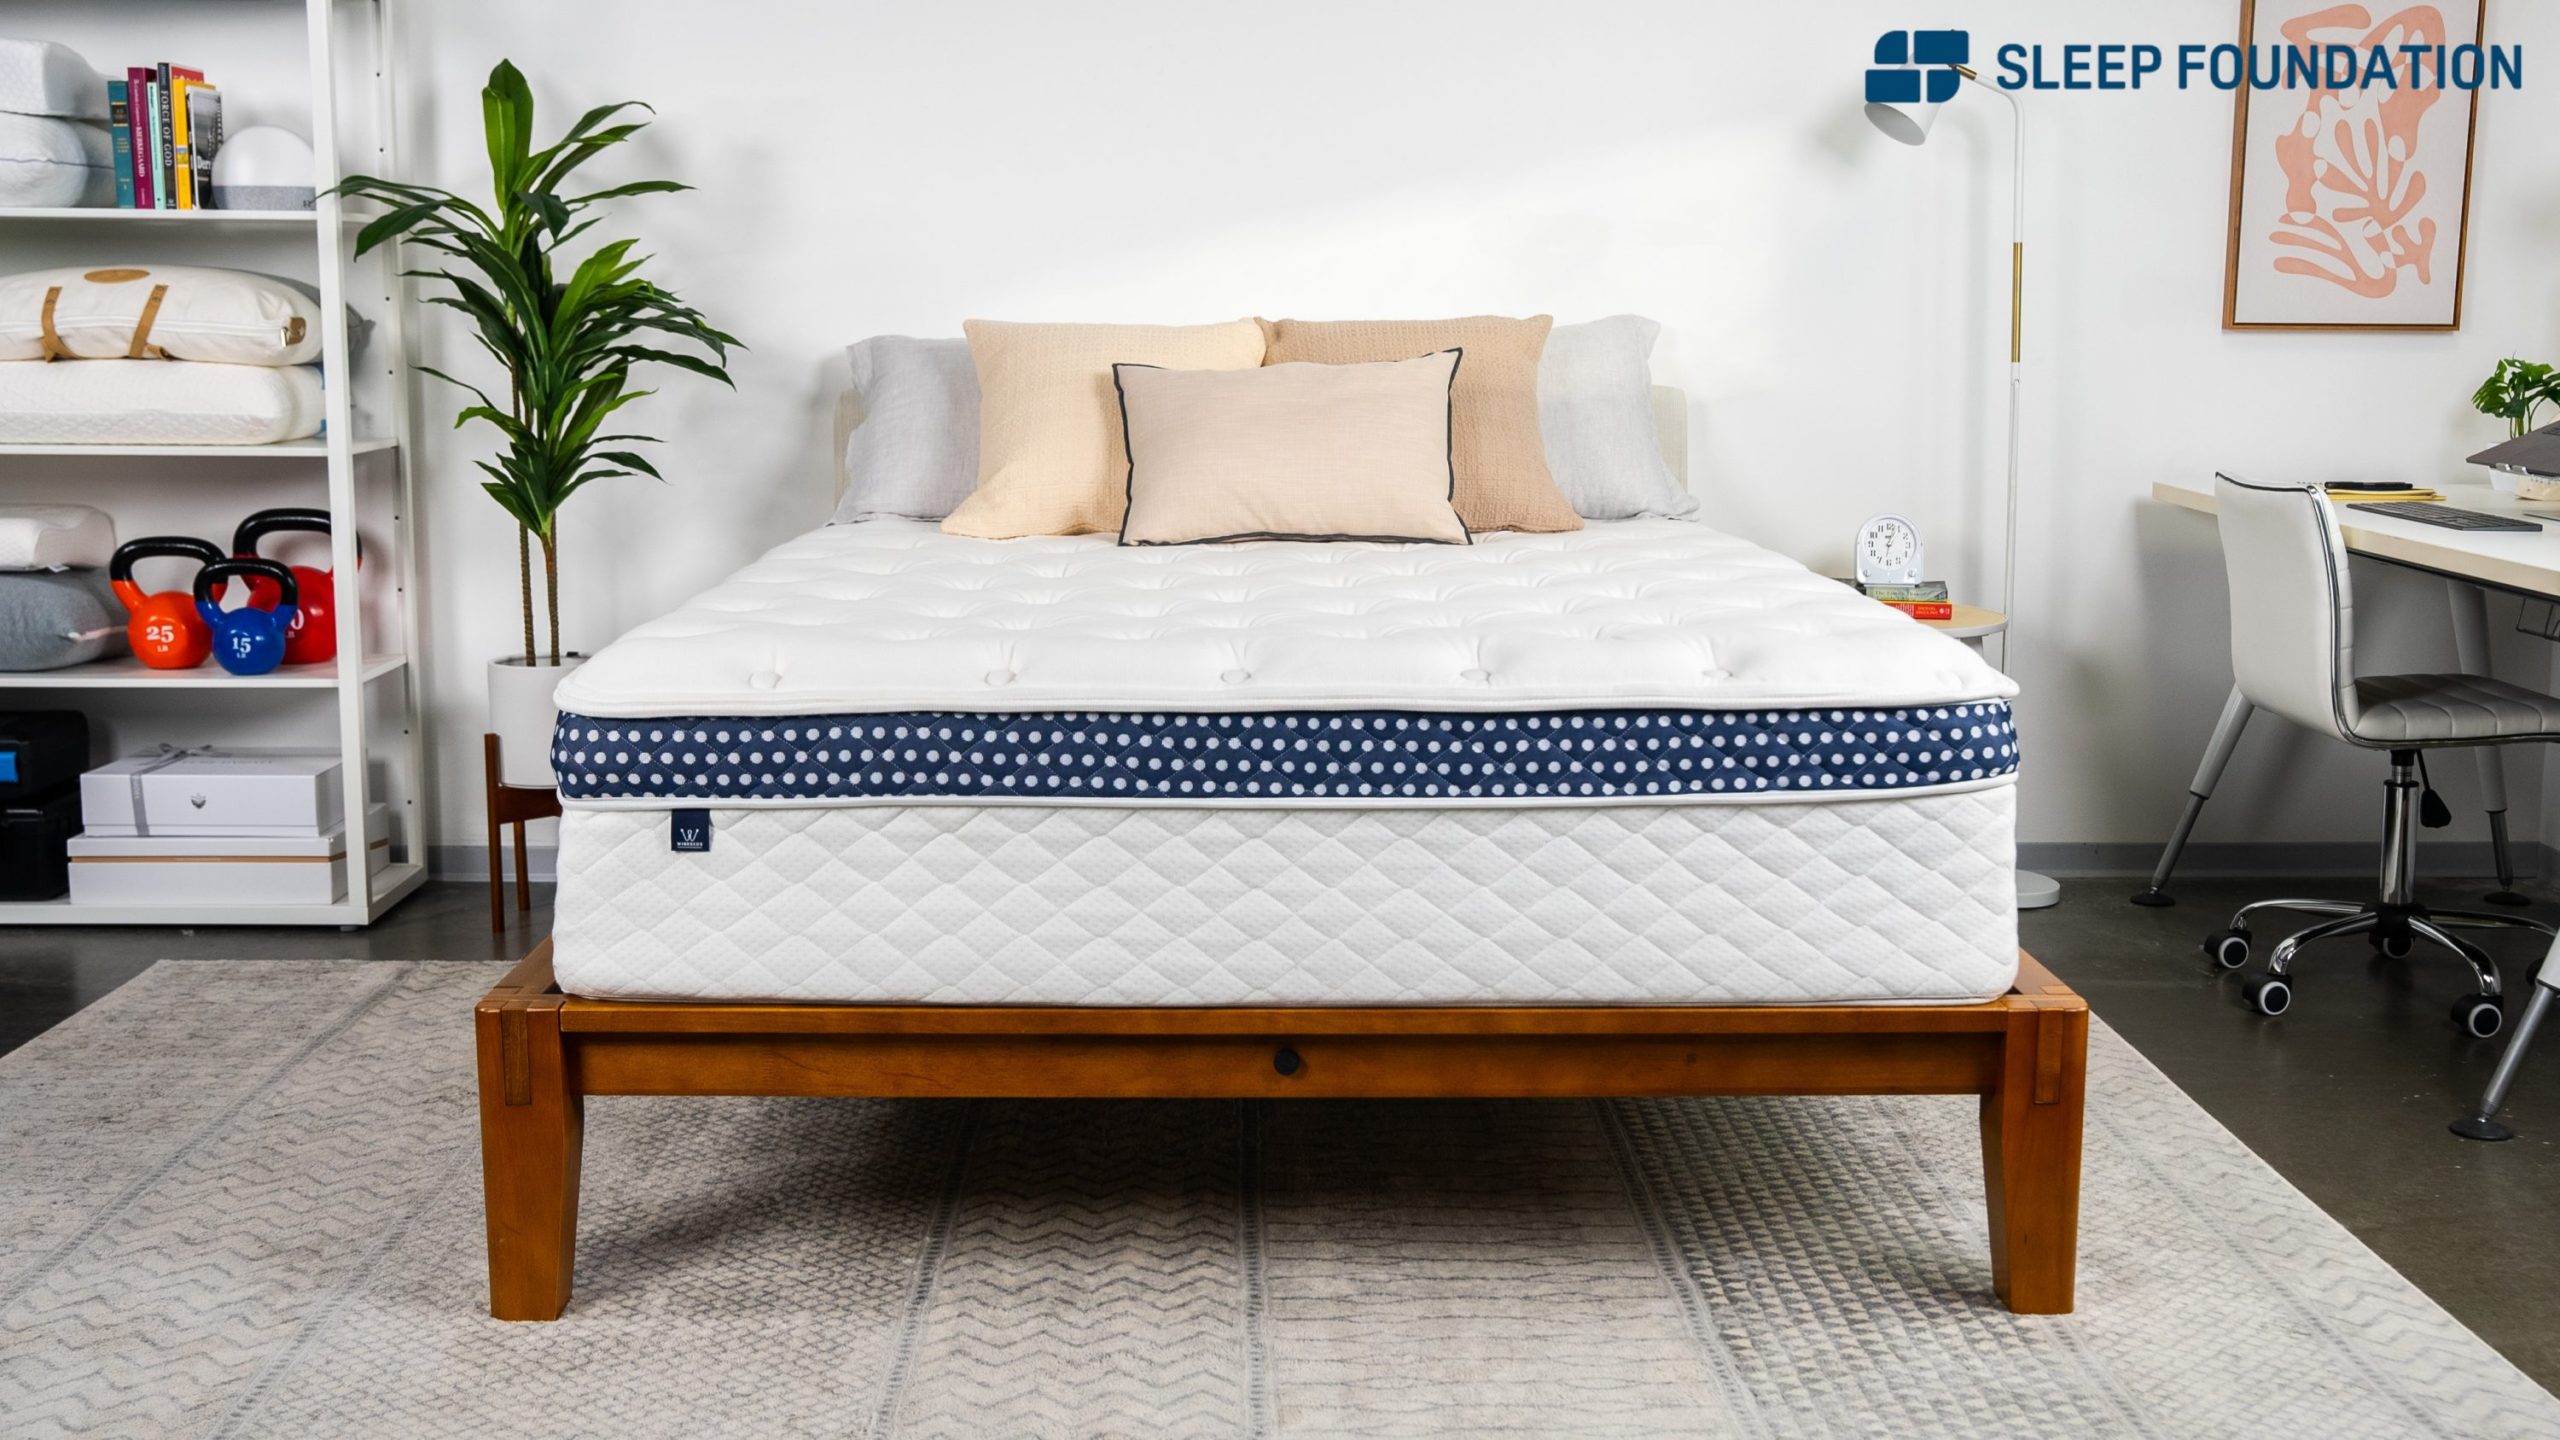 winkbed soft mattress review